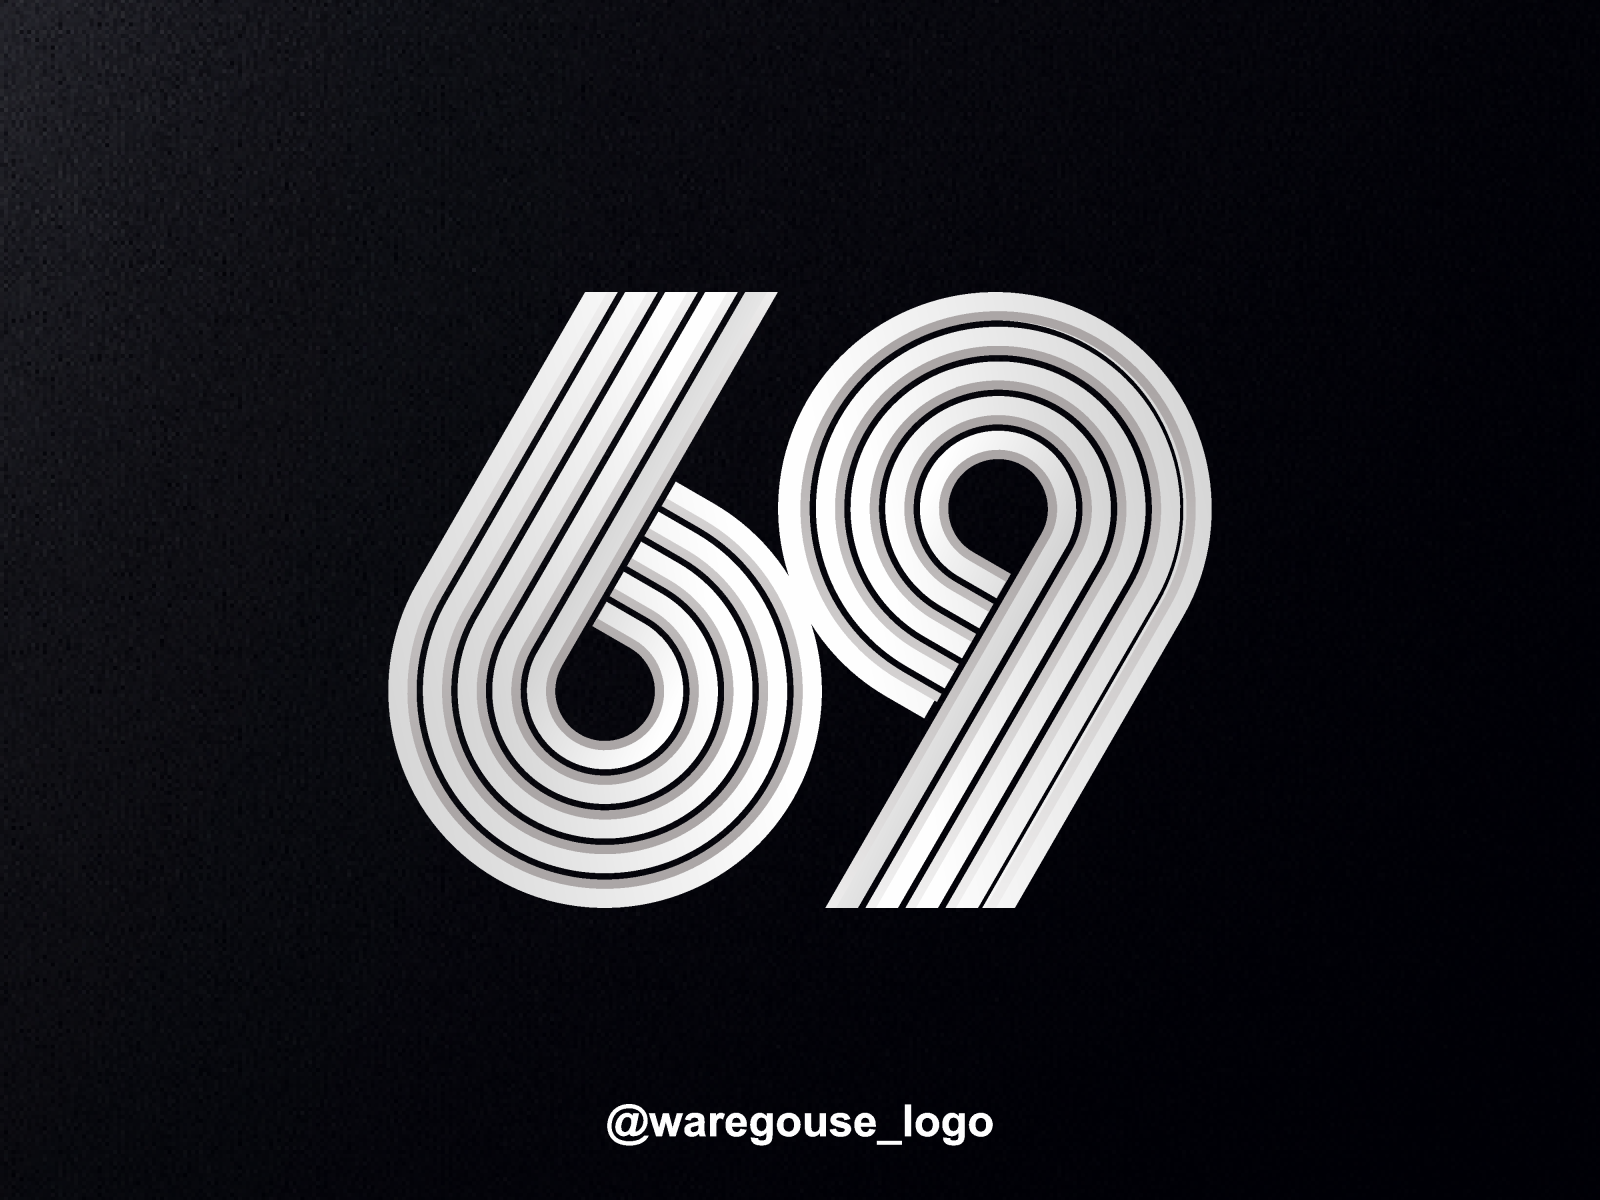 69 logo design by warehouse_logo on Dribbble